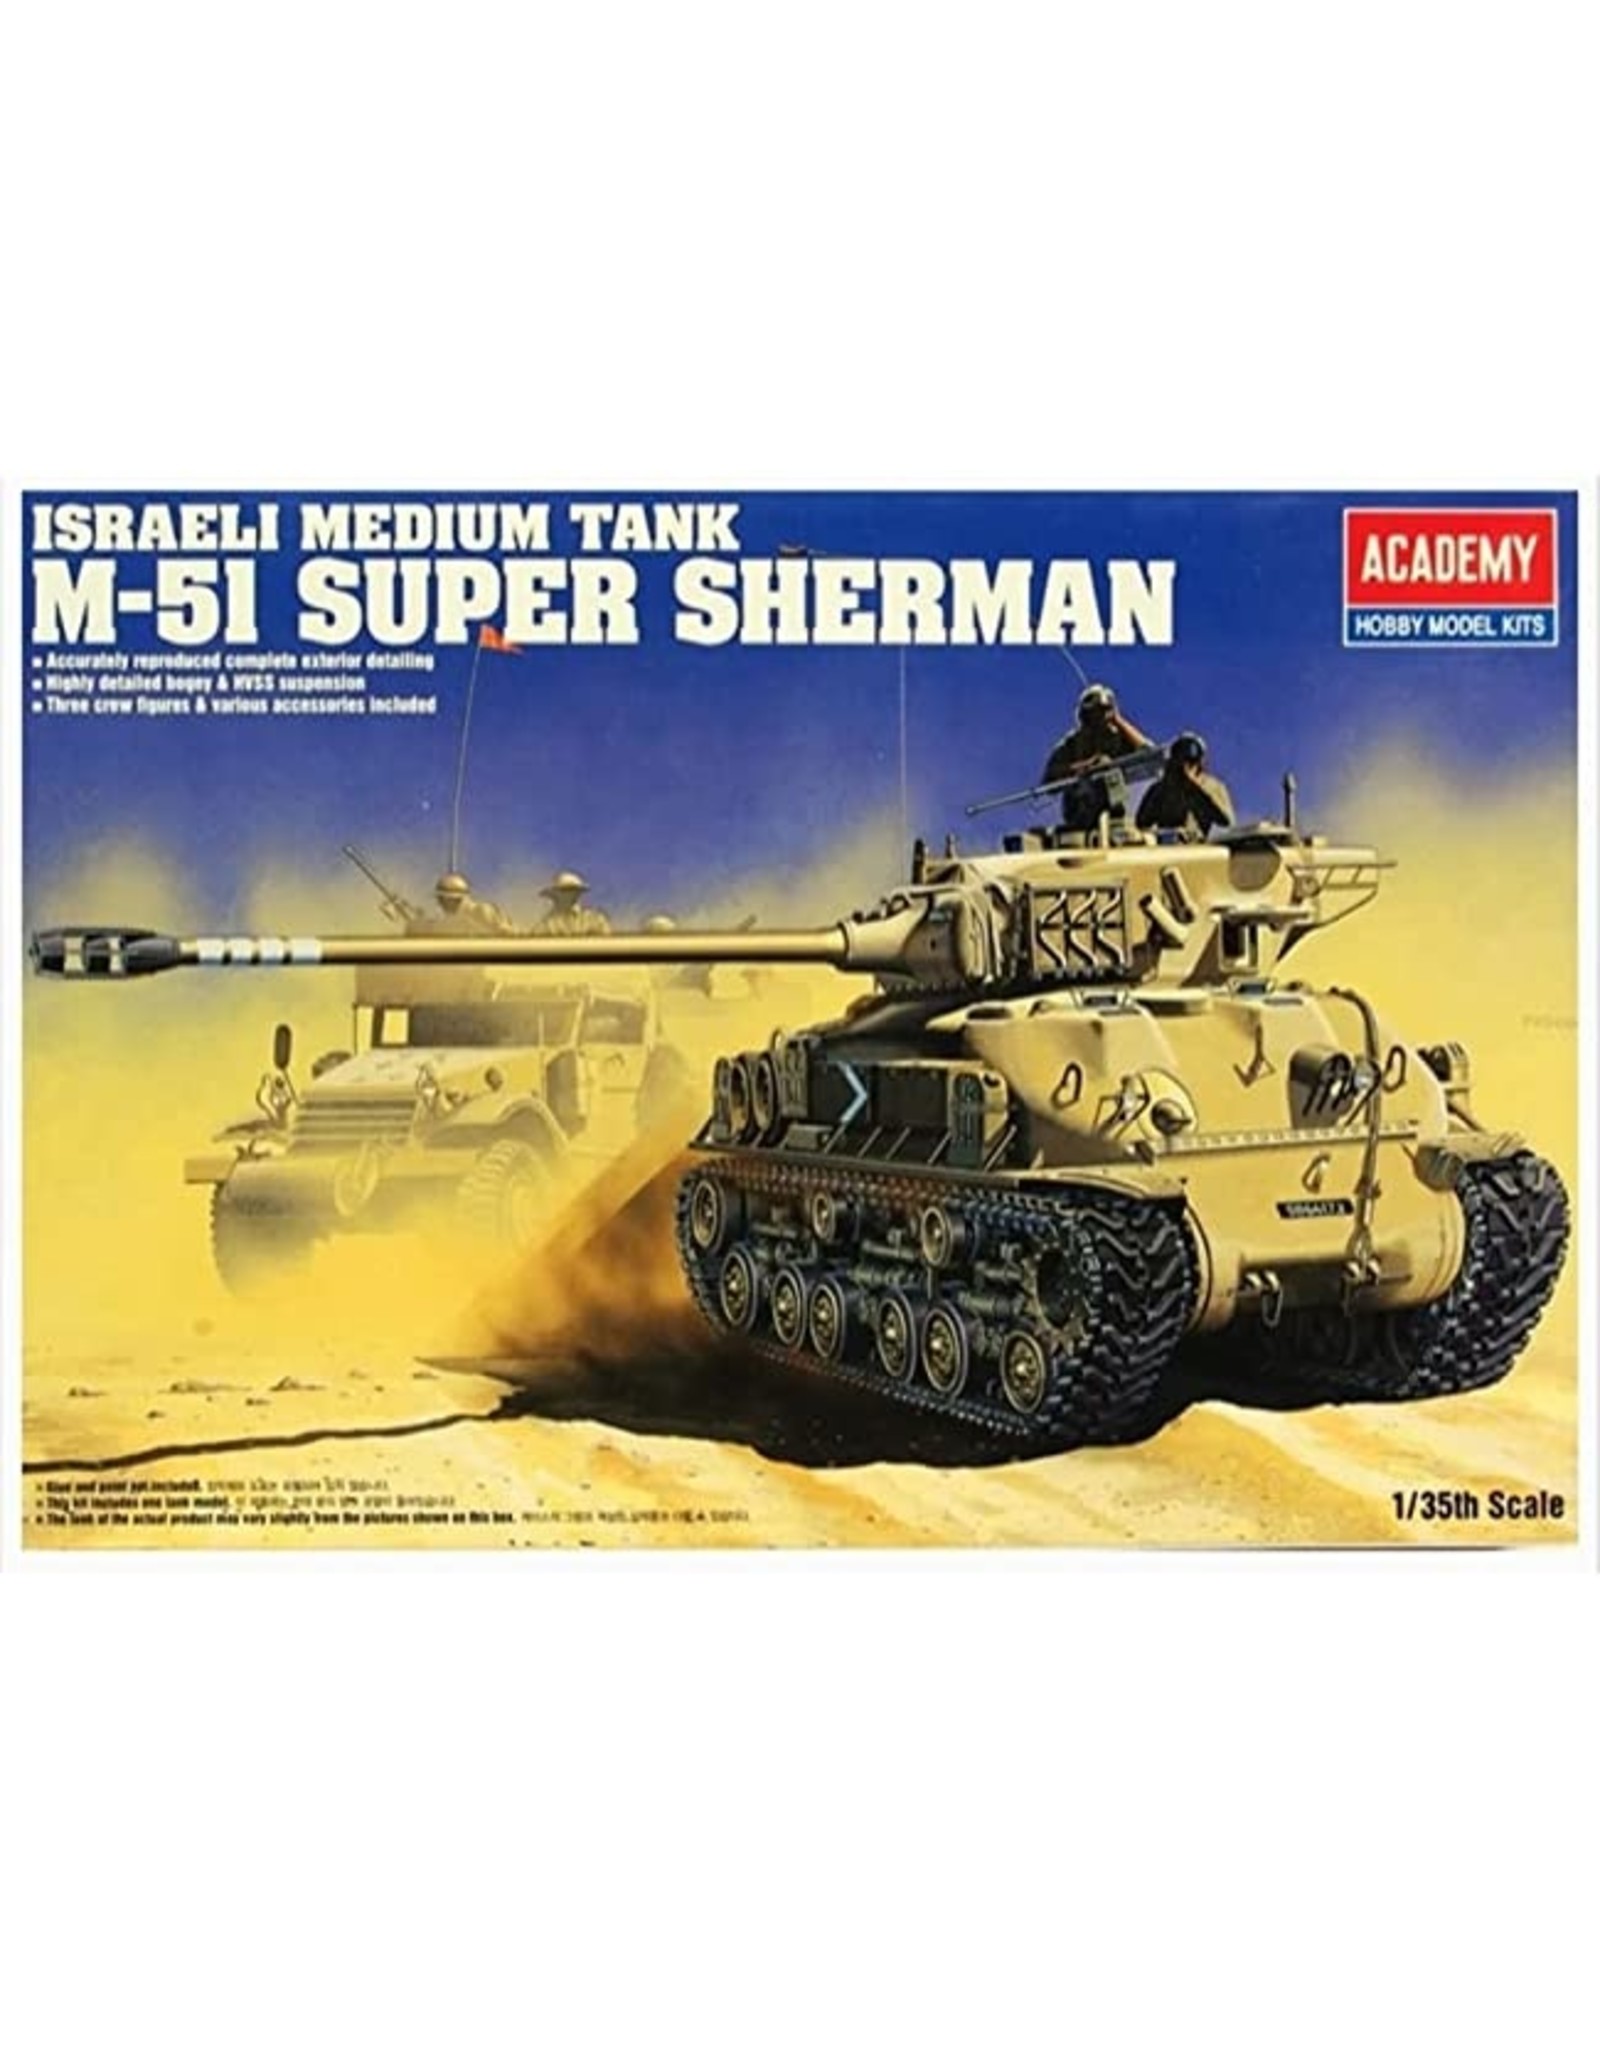 academy hobby Israeli medium tank M-51 super sherman - 1/35